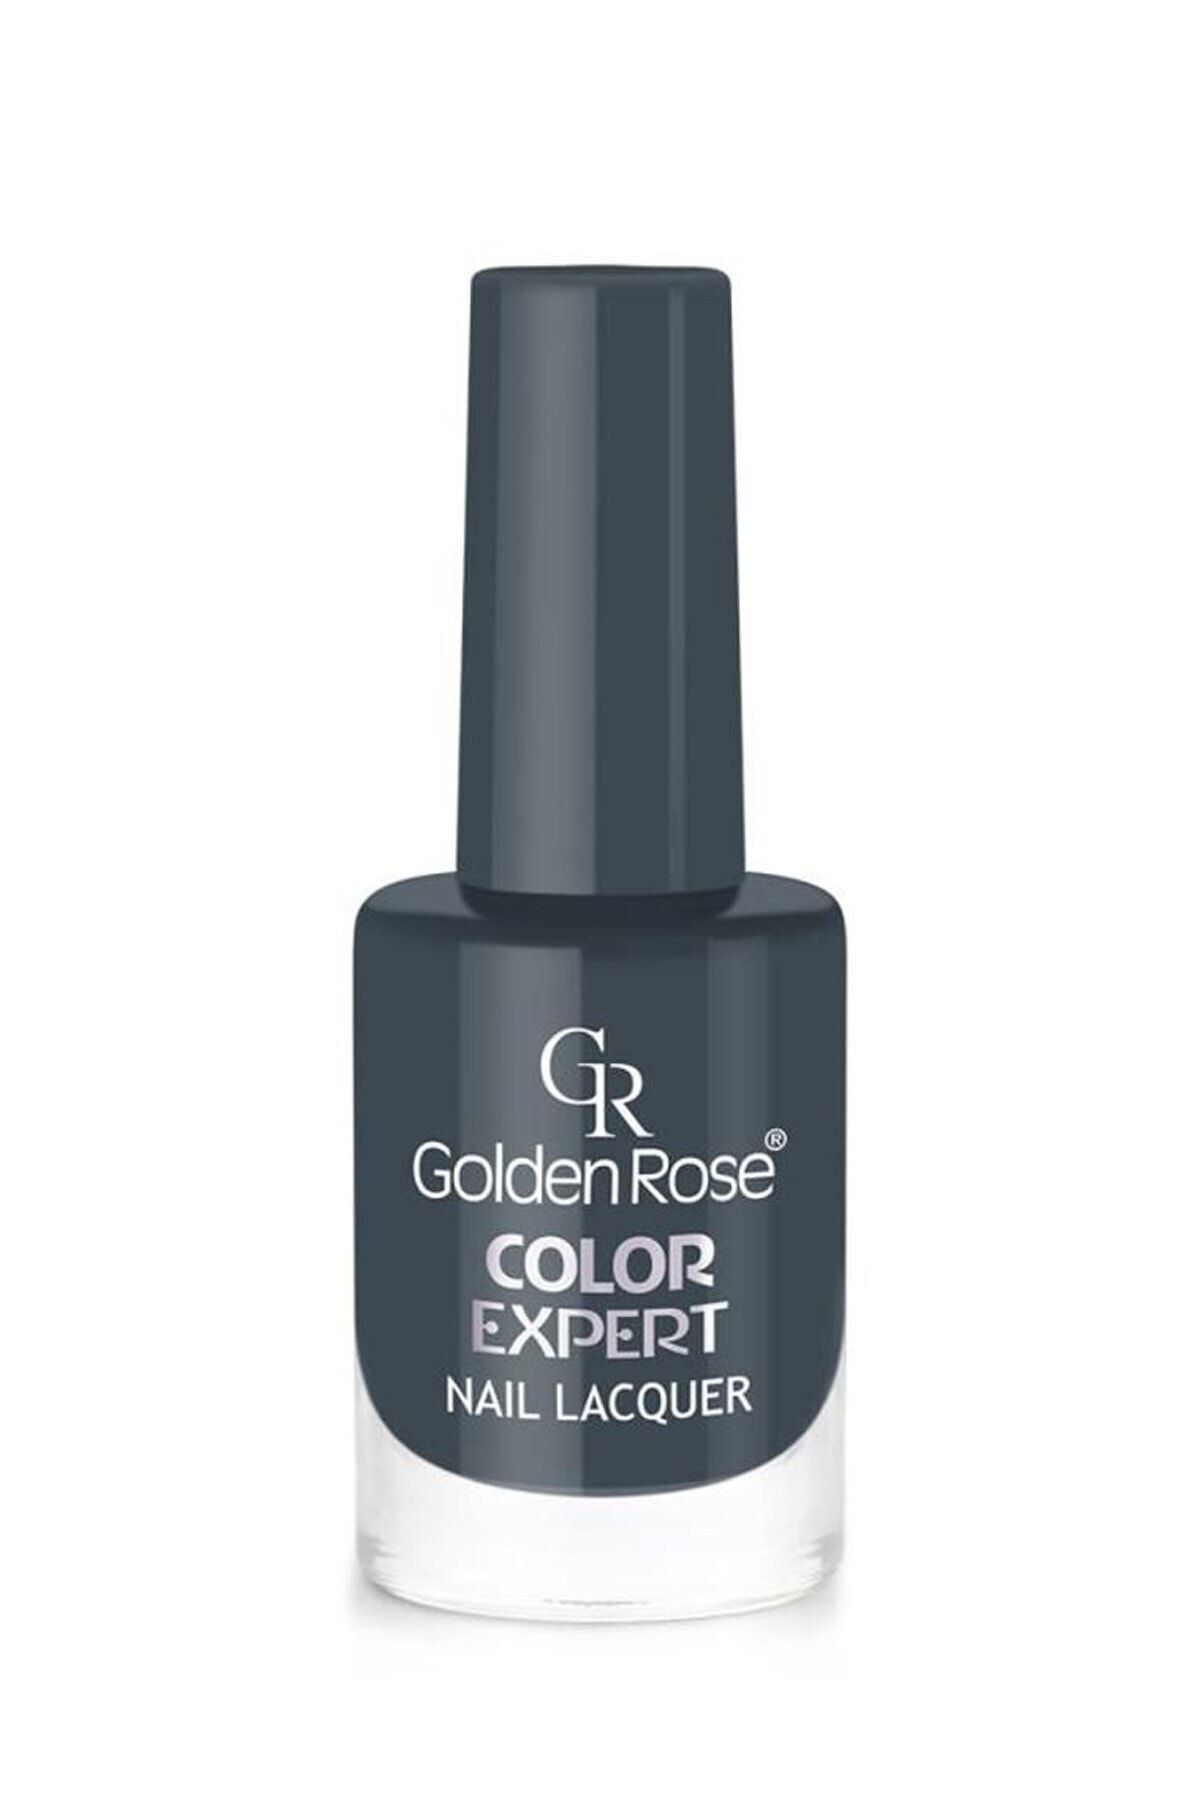 Golden Rose Oje - Color Expert Nail Lacquer No: 91 8691190703912